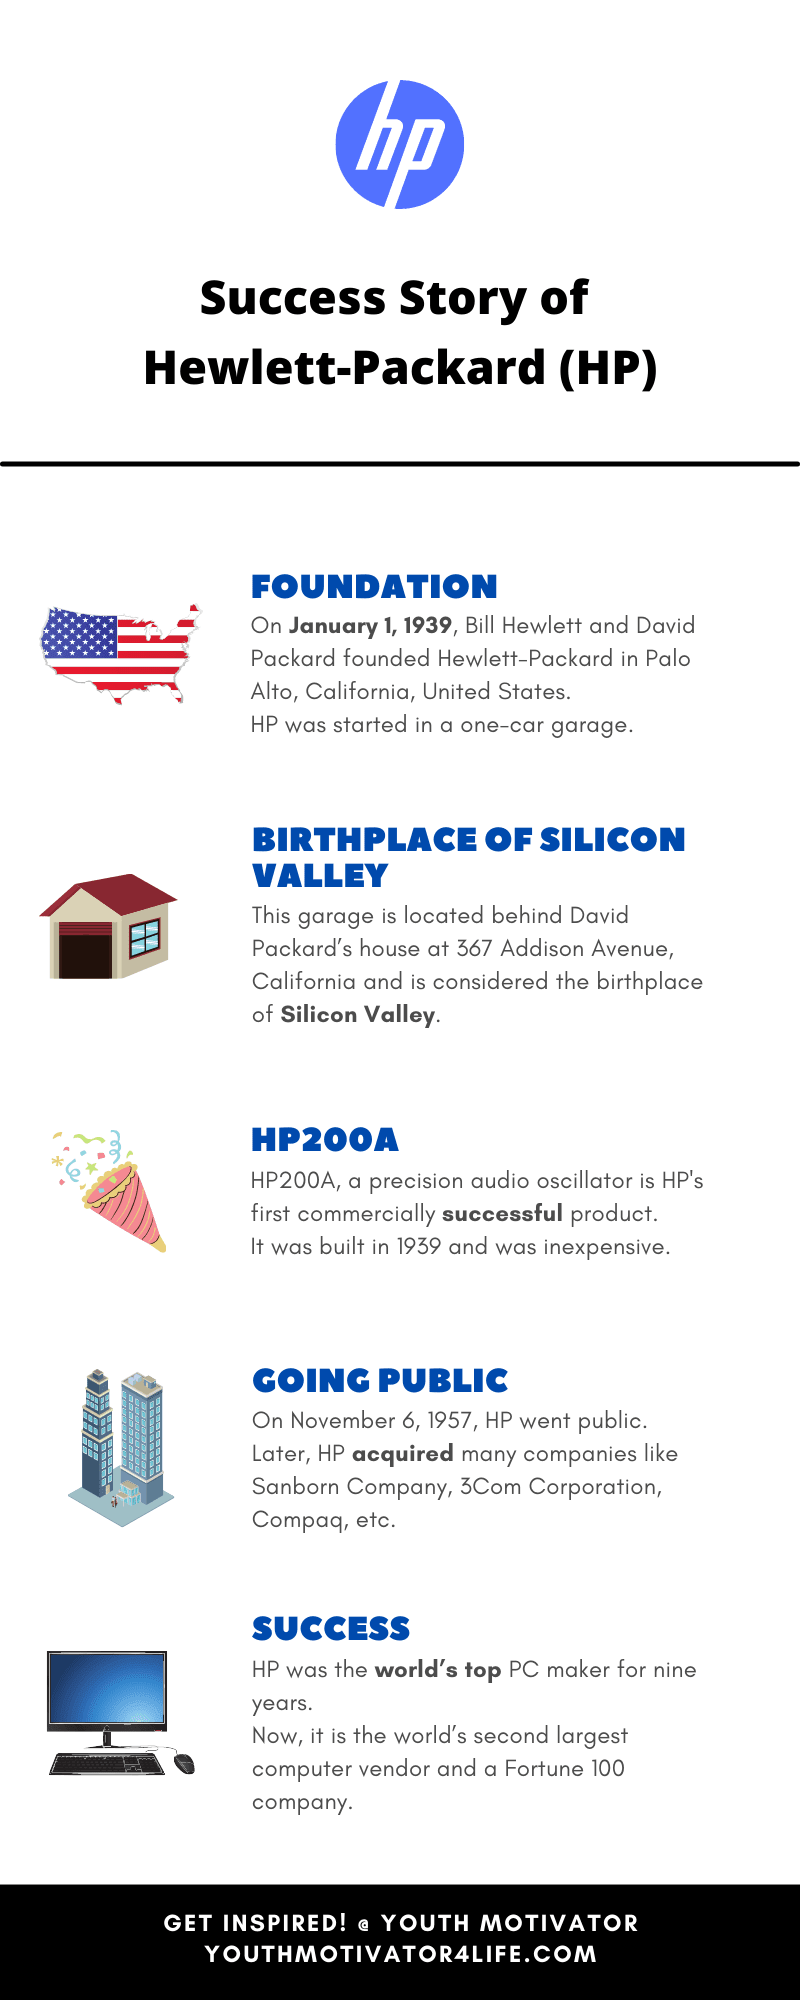 An infographic on story of Hewlett-Packard (HP)